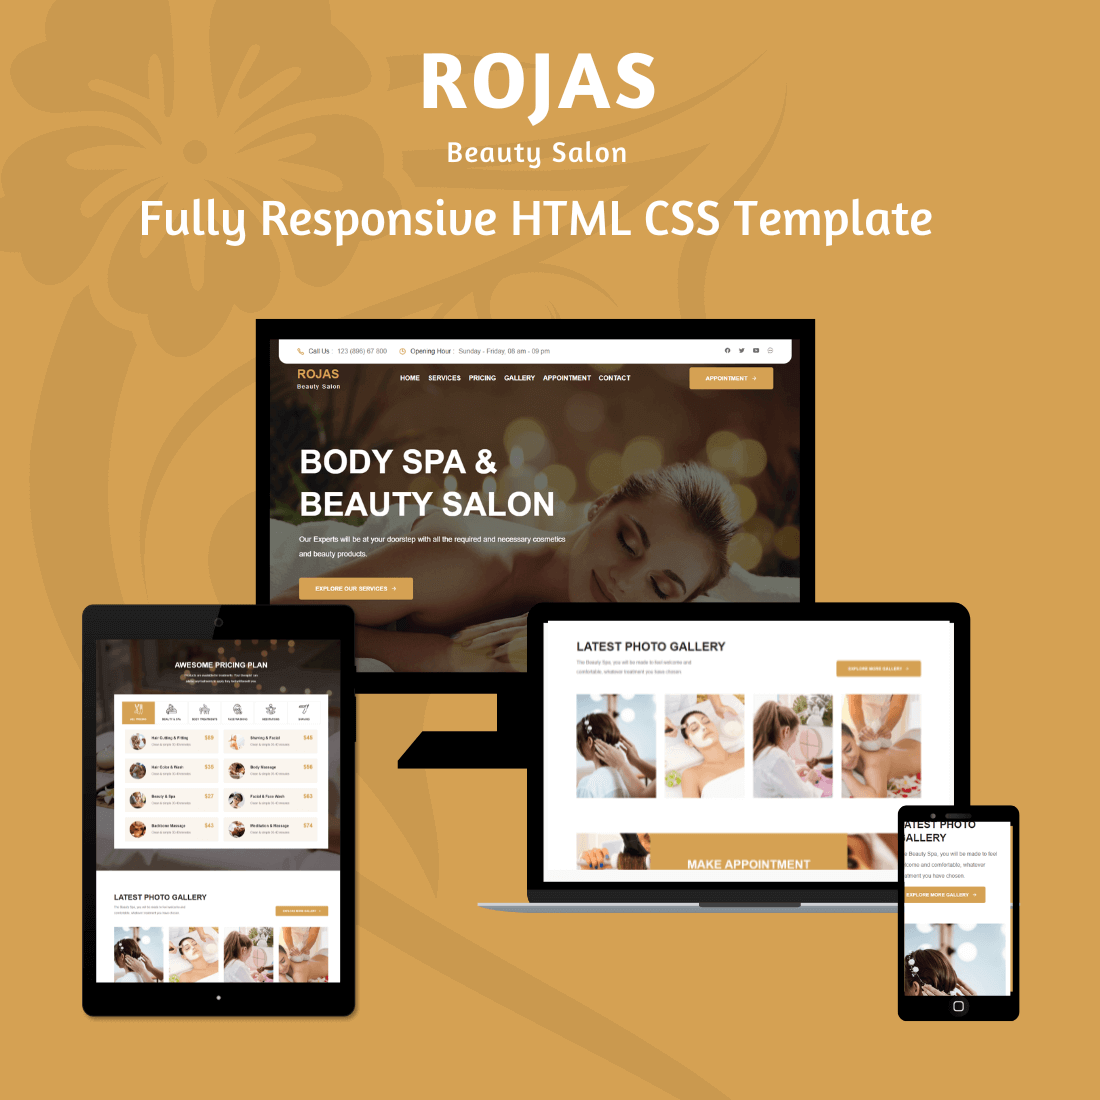 Website design for a beauty salon.